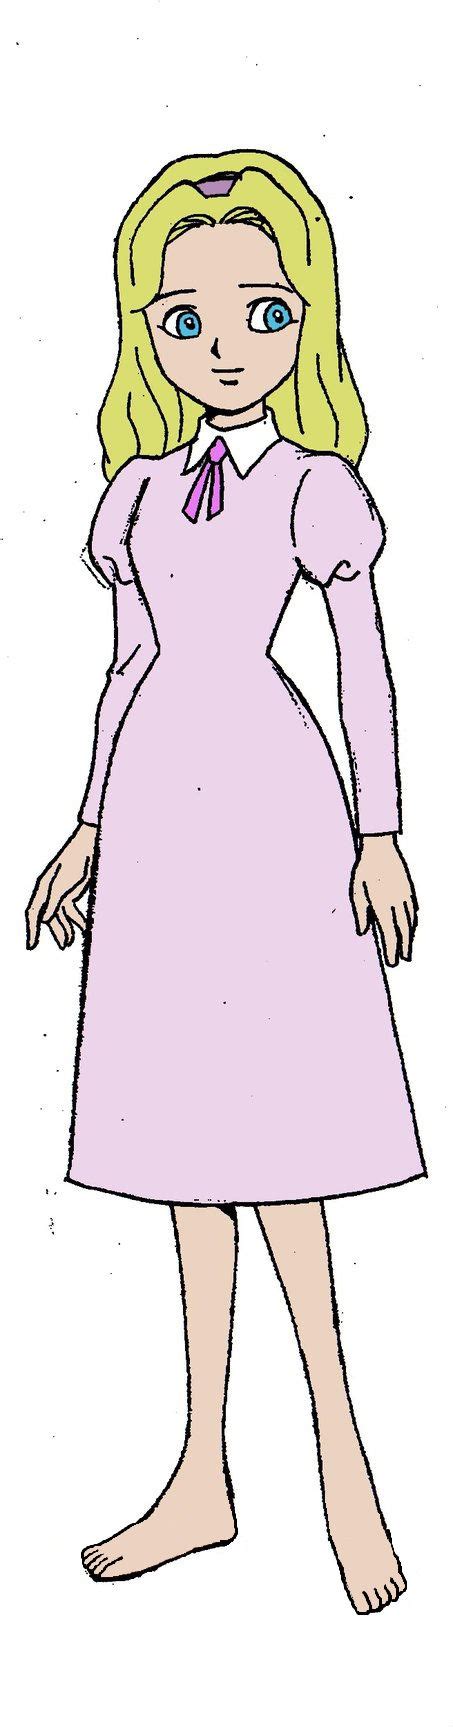 Maria Robotnik Barefoot In Pink Dress Sonic X By Ninjakingofhearts On